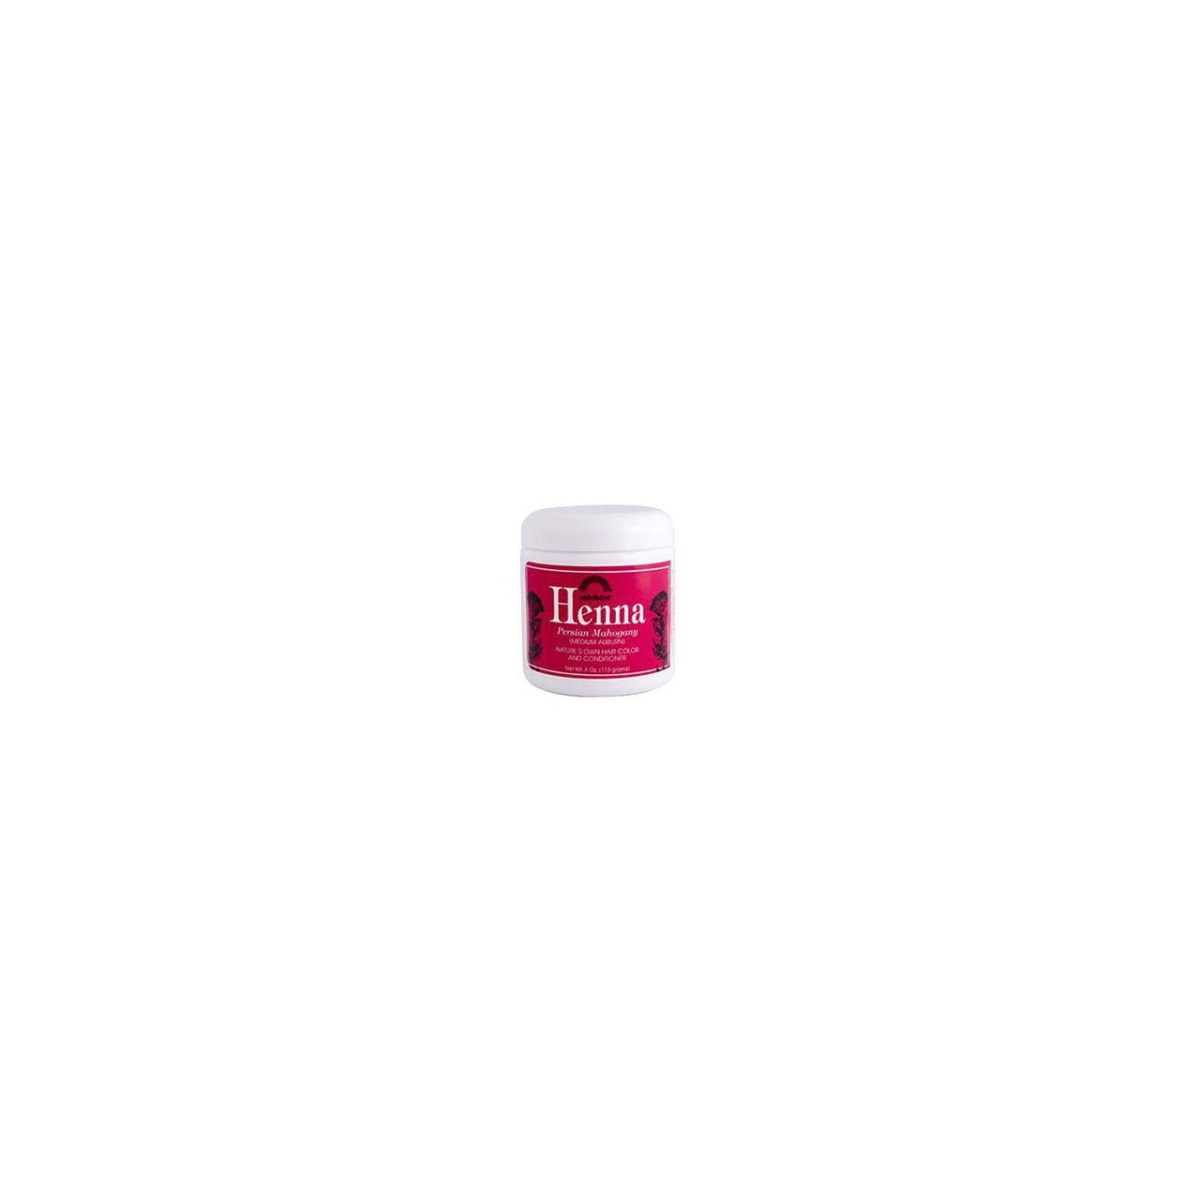 Hg0287508 4 Oz Henna Hair Color & Conditioner - Persian Mahogany Medium Auburn